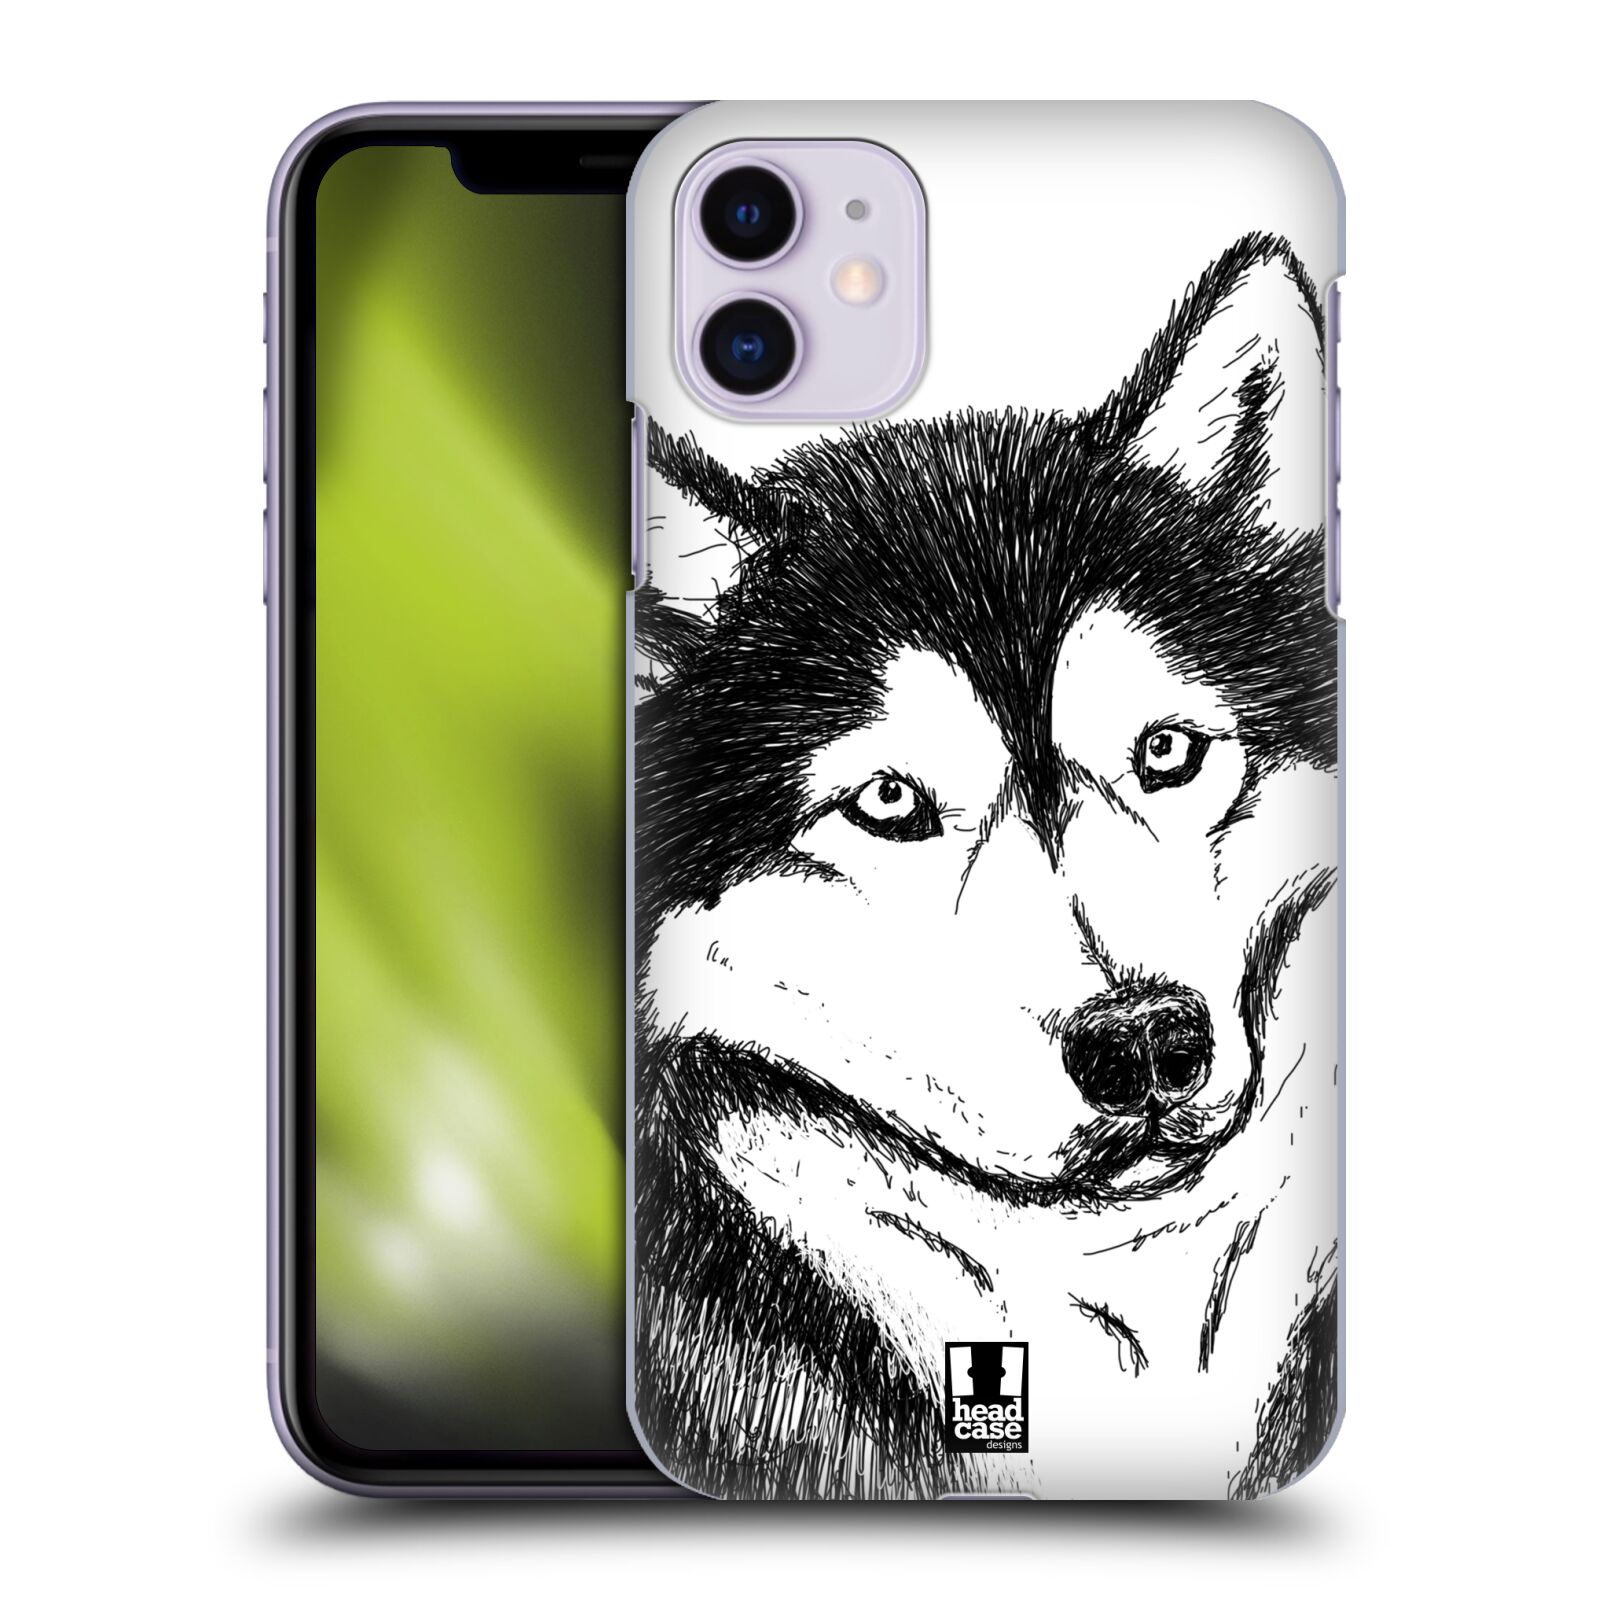 Pouzdro na mobil Apple Iphone 11 - HEAD CASE - vzor Kreslená zvířátka černá a bílá pes husky